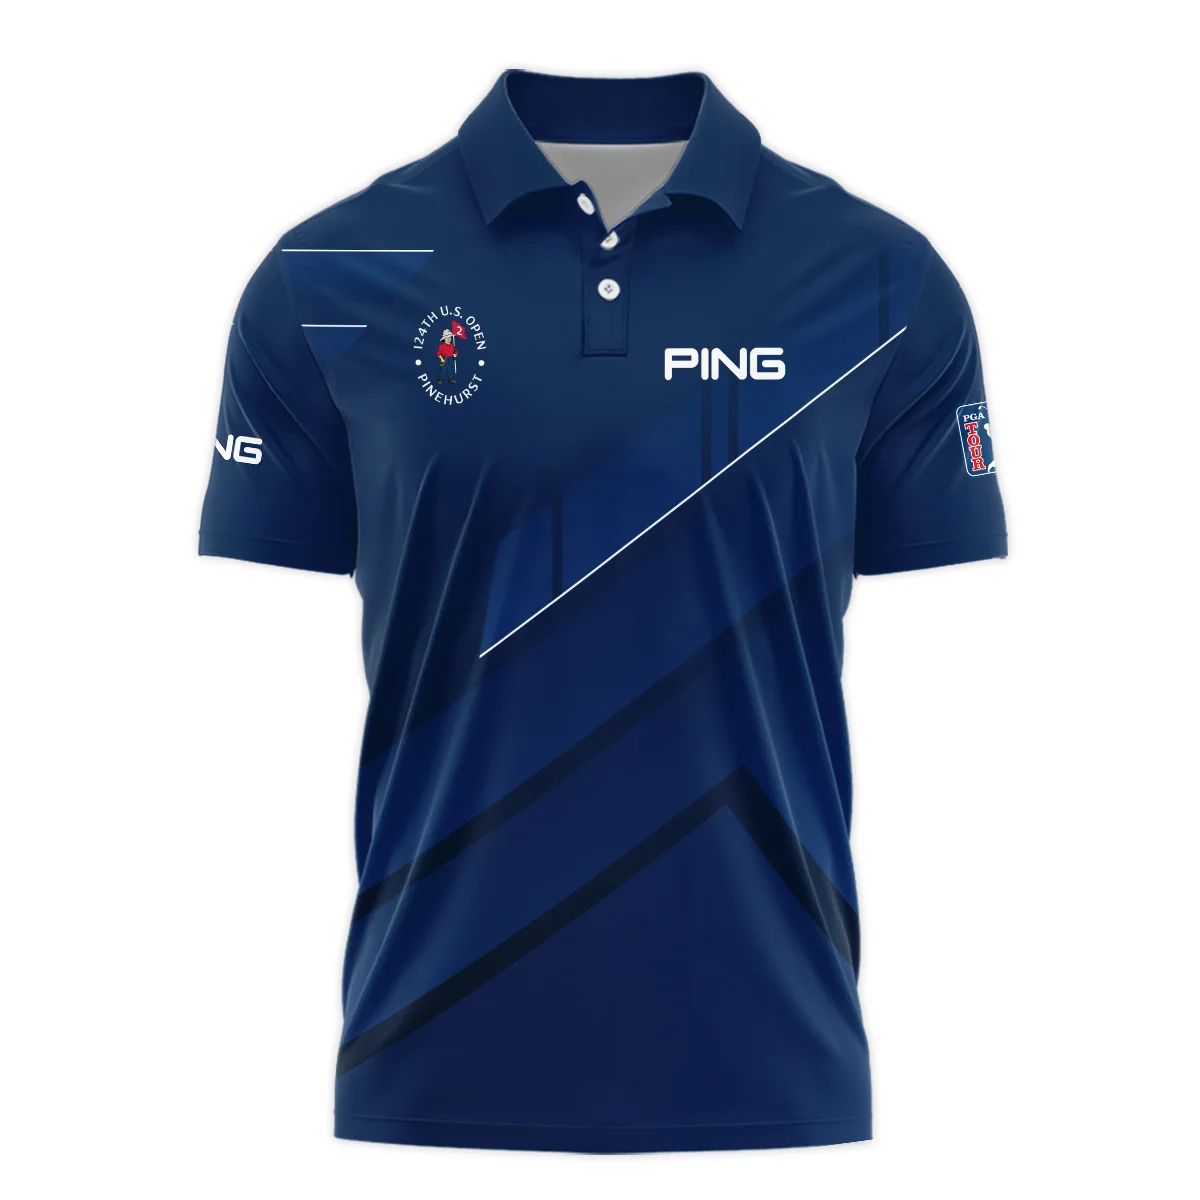 Ping 124th U.S. Open Pinehurst Blue Gradient With White Straight Line Zipper Polo Shirt Style Classic Zipper Polo Shirt For Men